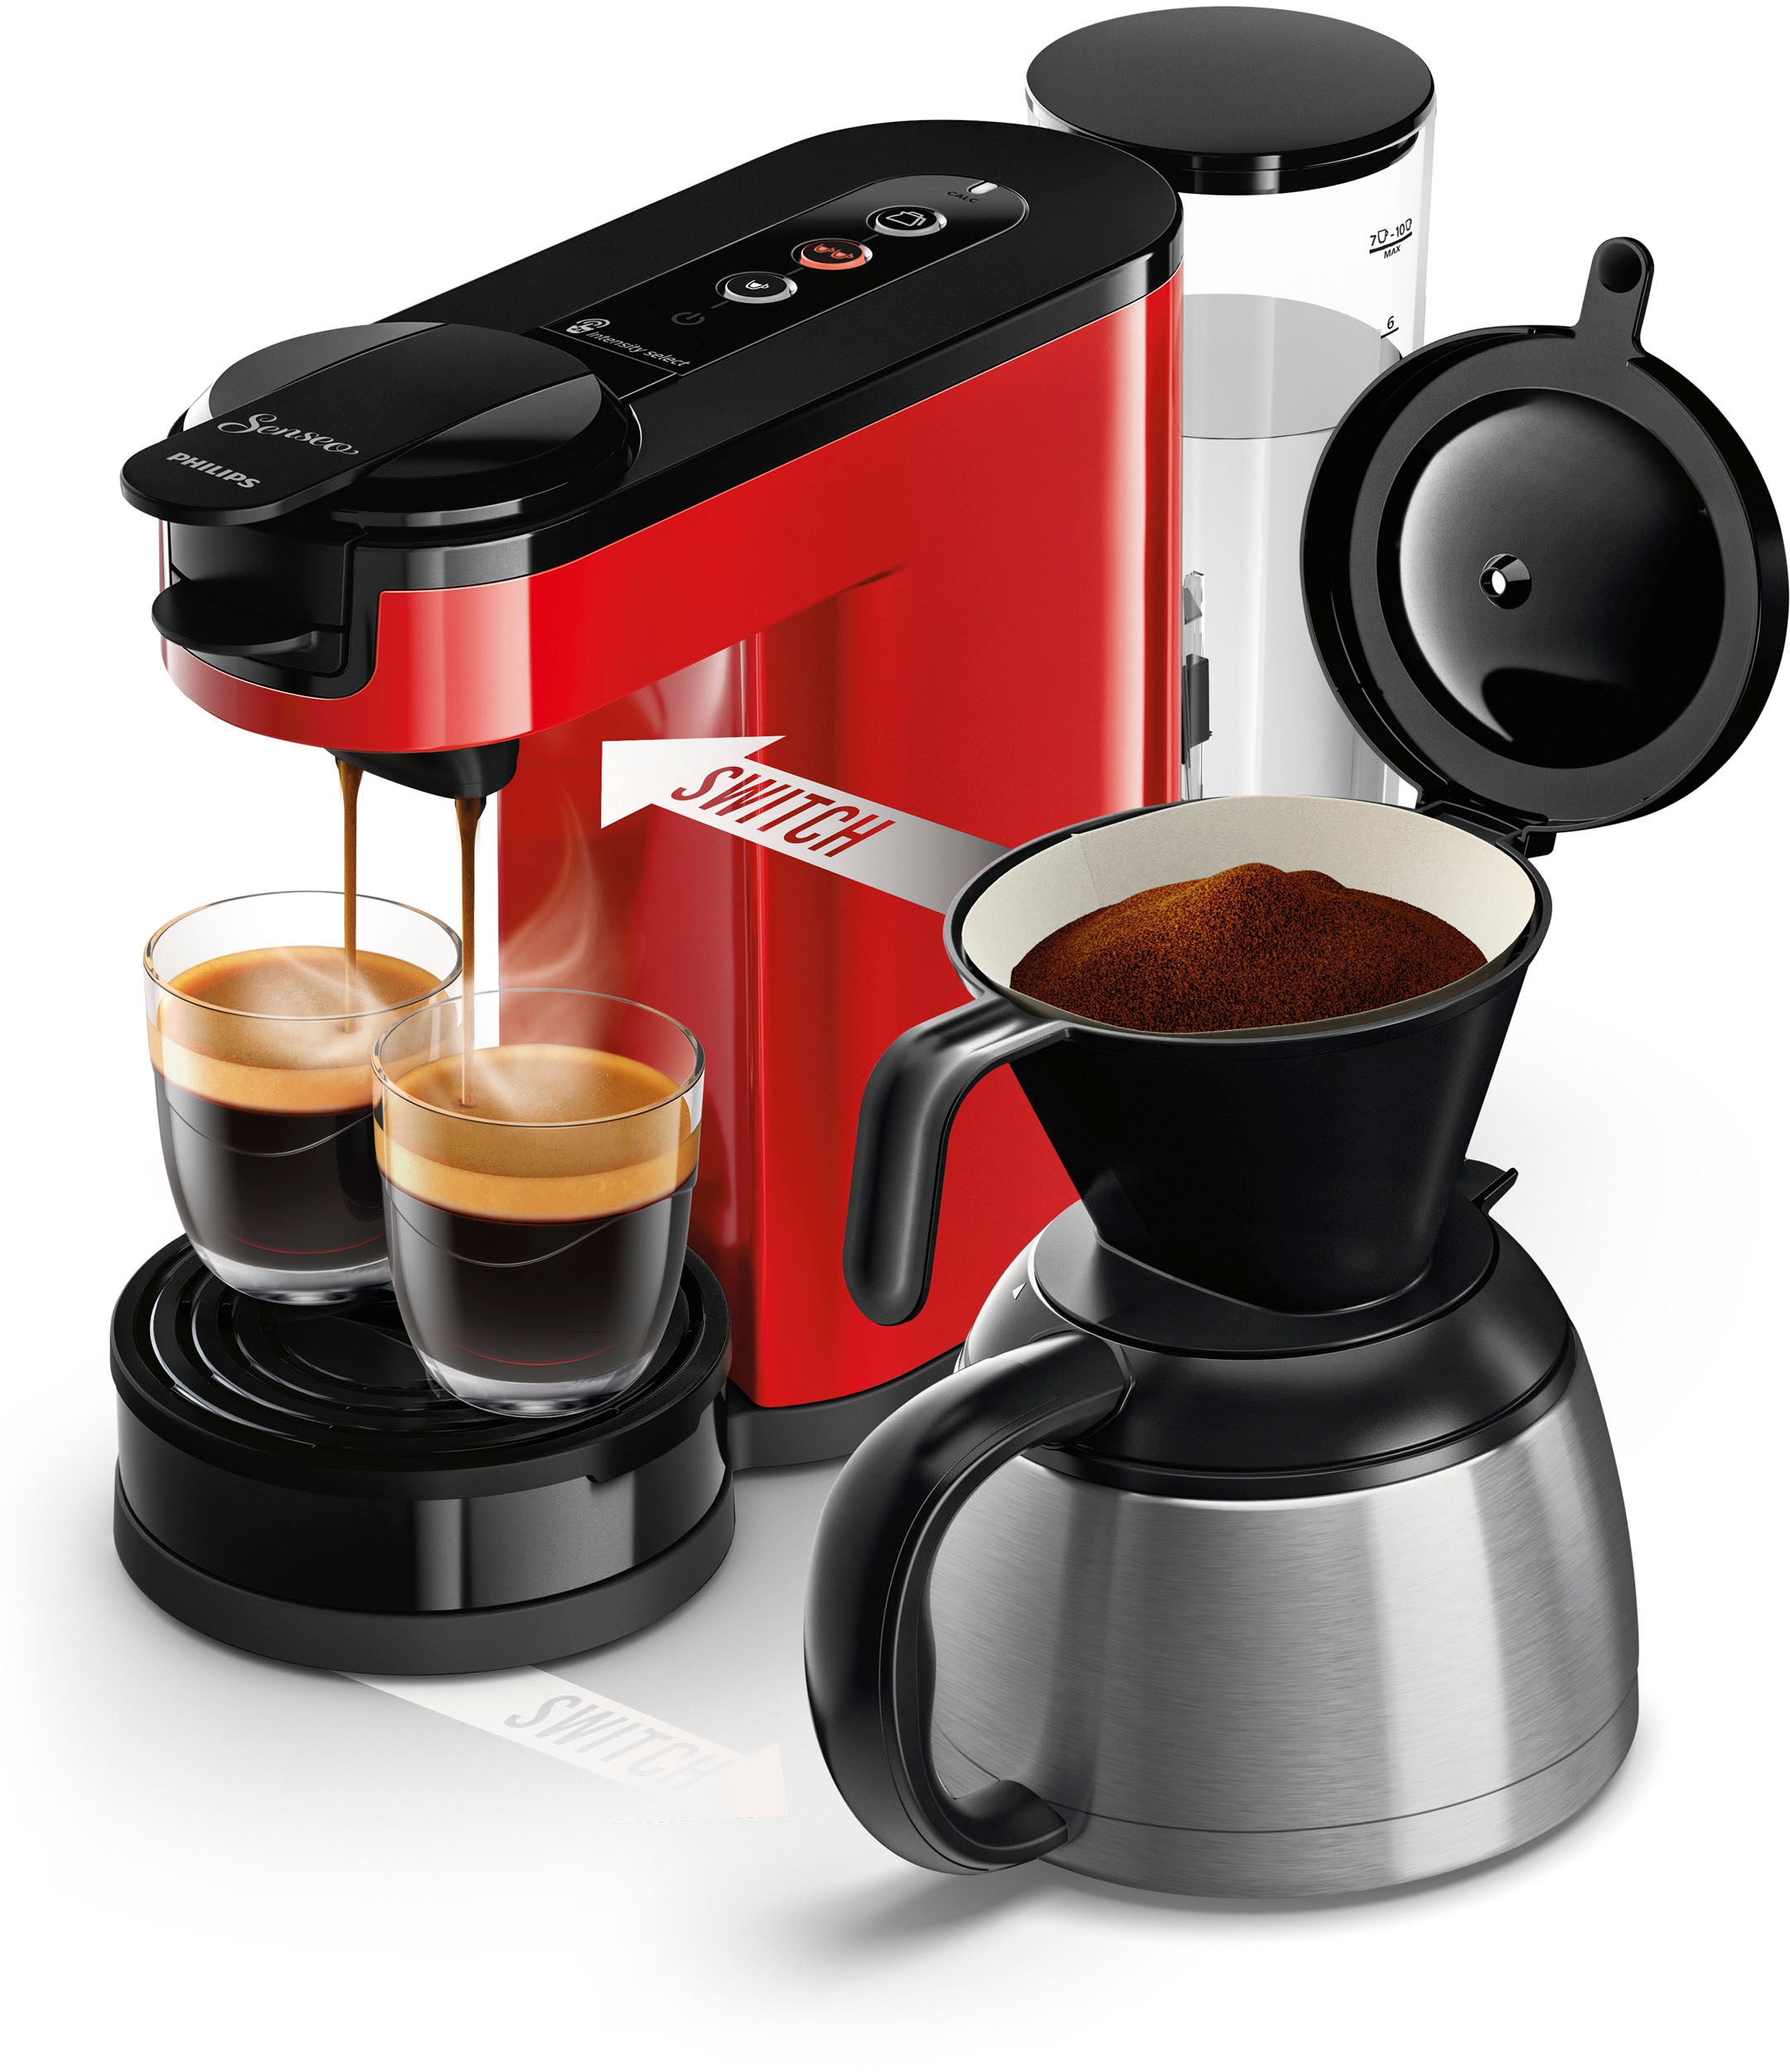 Philips Senseo Kaffeepadmaschine „Switch HD6592/84“, 1 l Kaffeekanne, inkl. Kaffeepaddose im Wert von 9,90 € UVP rot